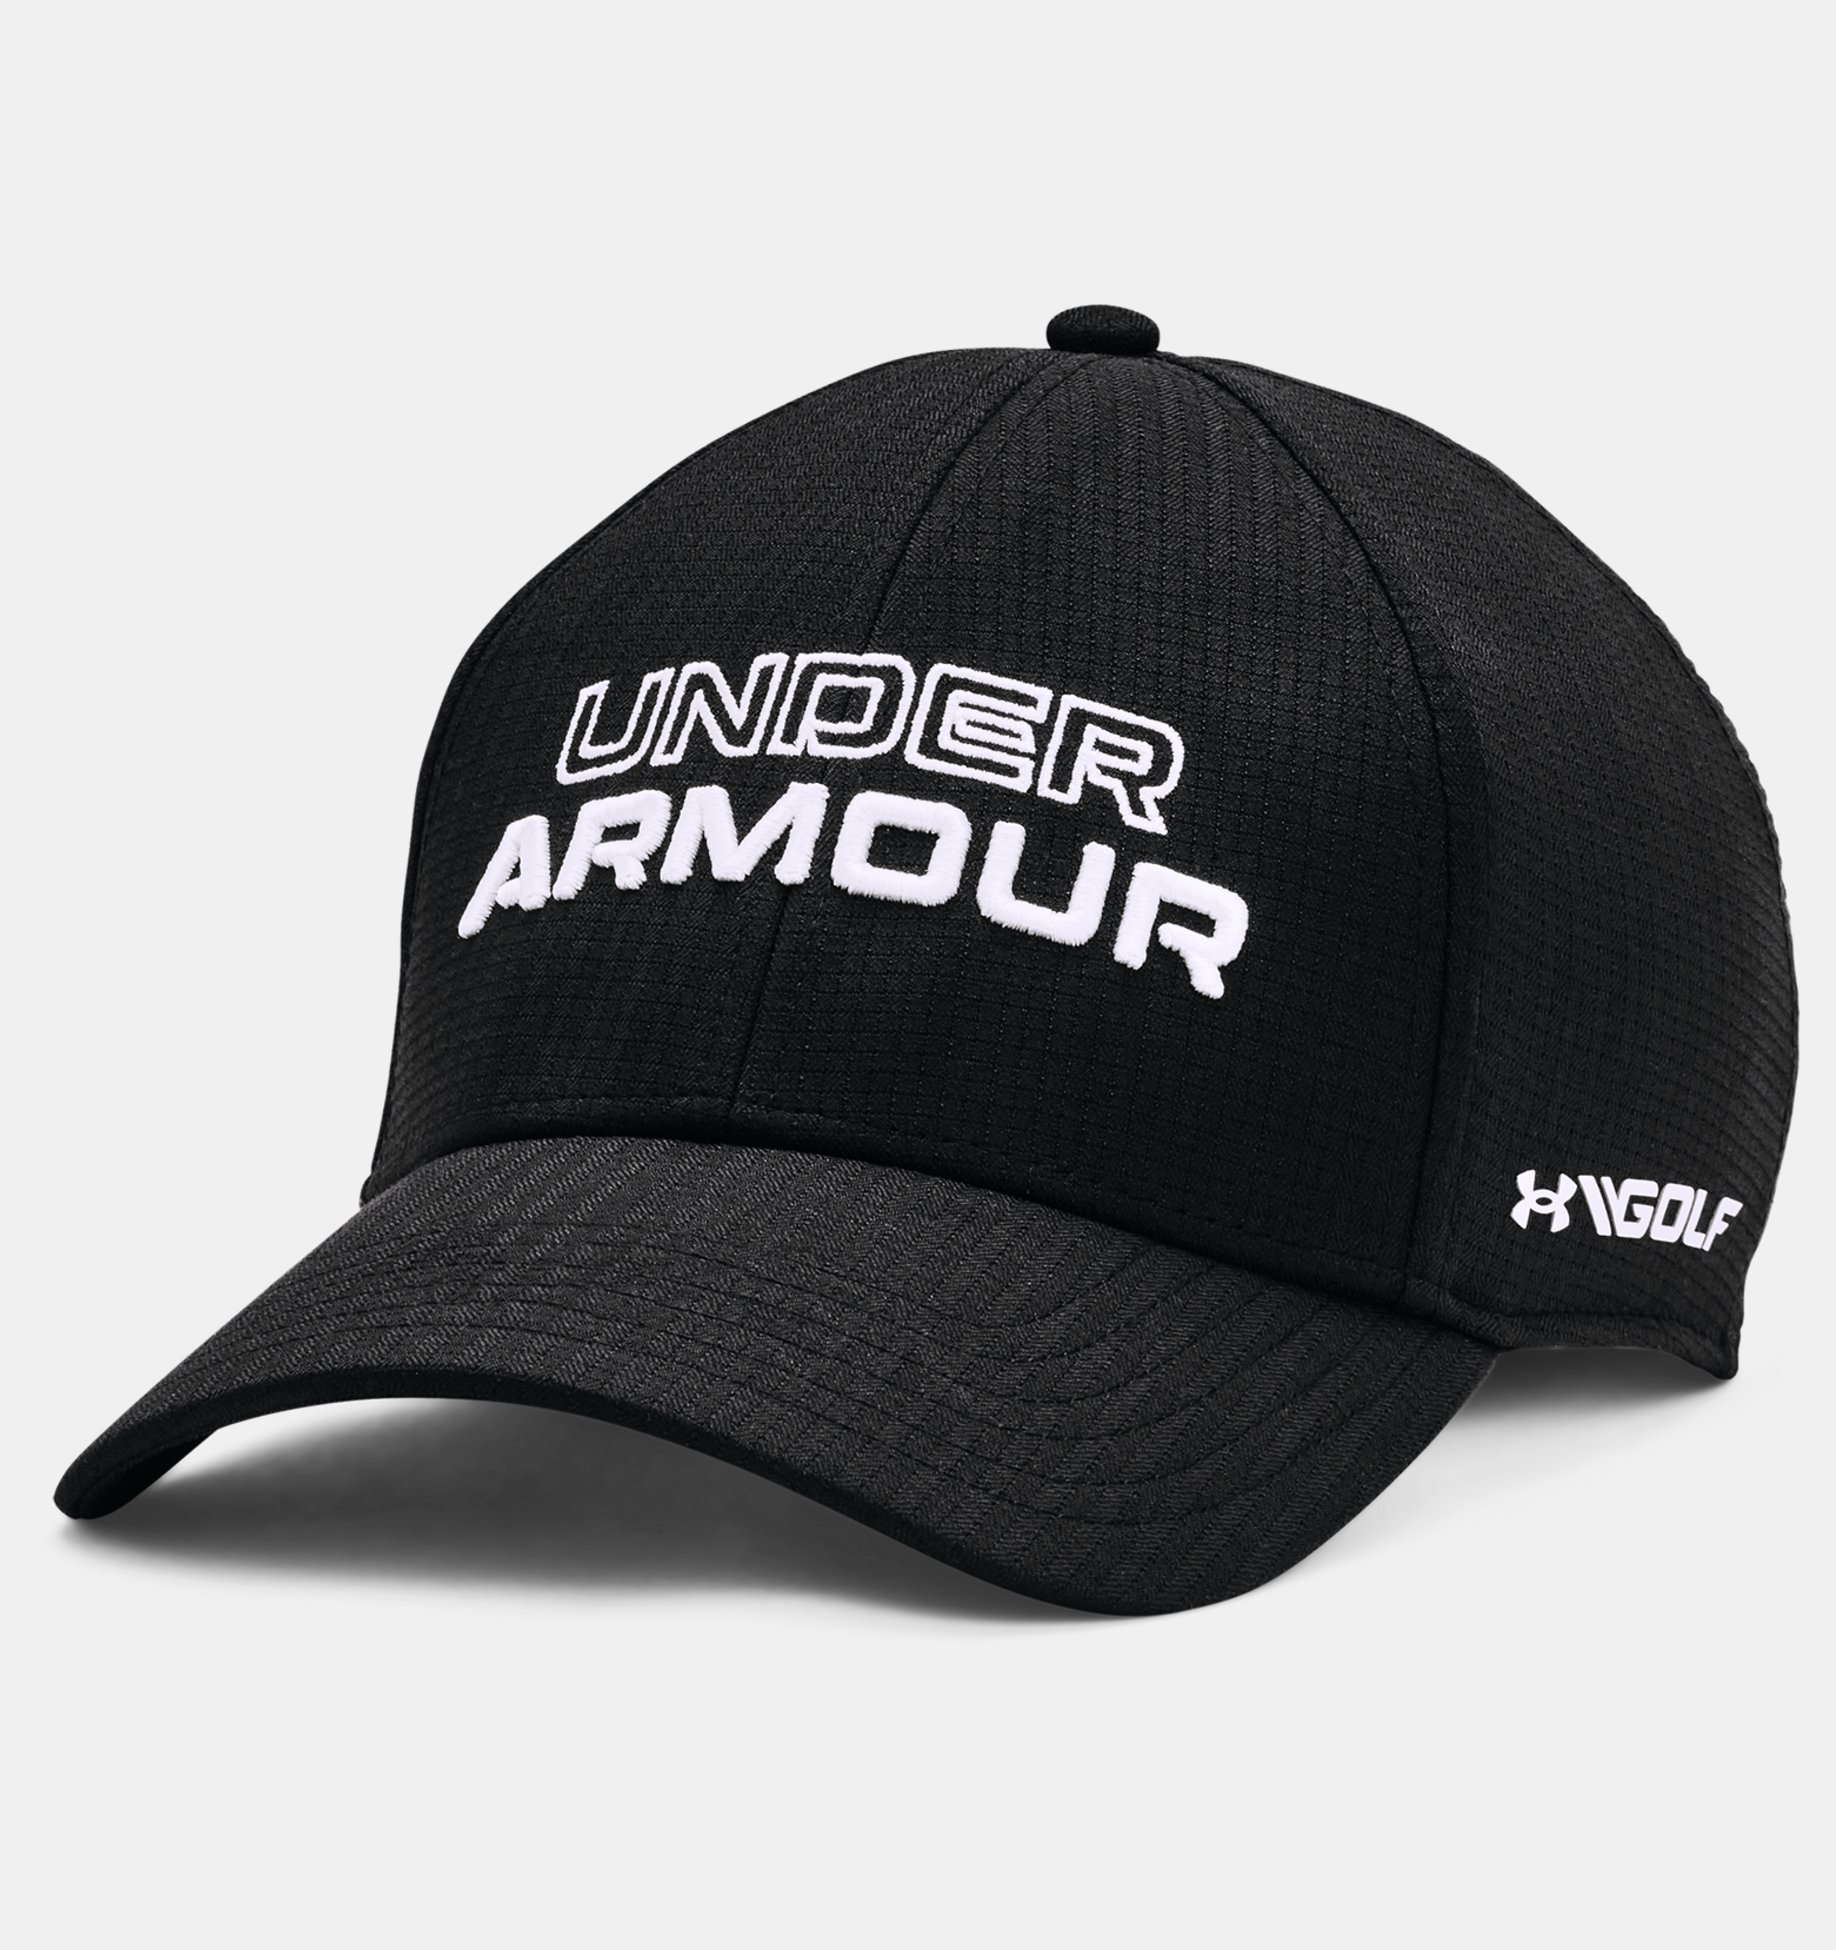 Underarmour Mens UA Jordan Spieth Golf Hat